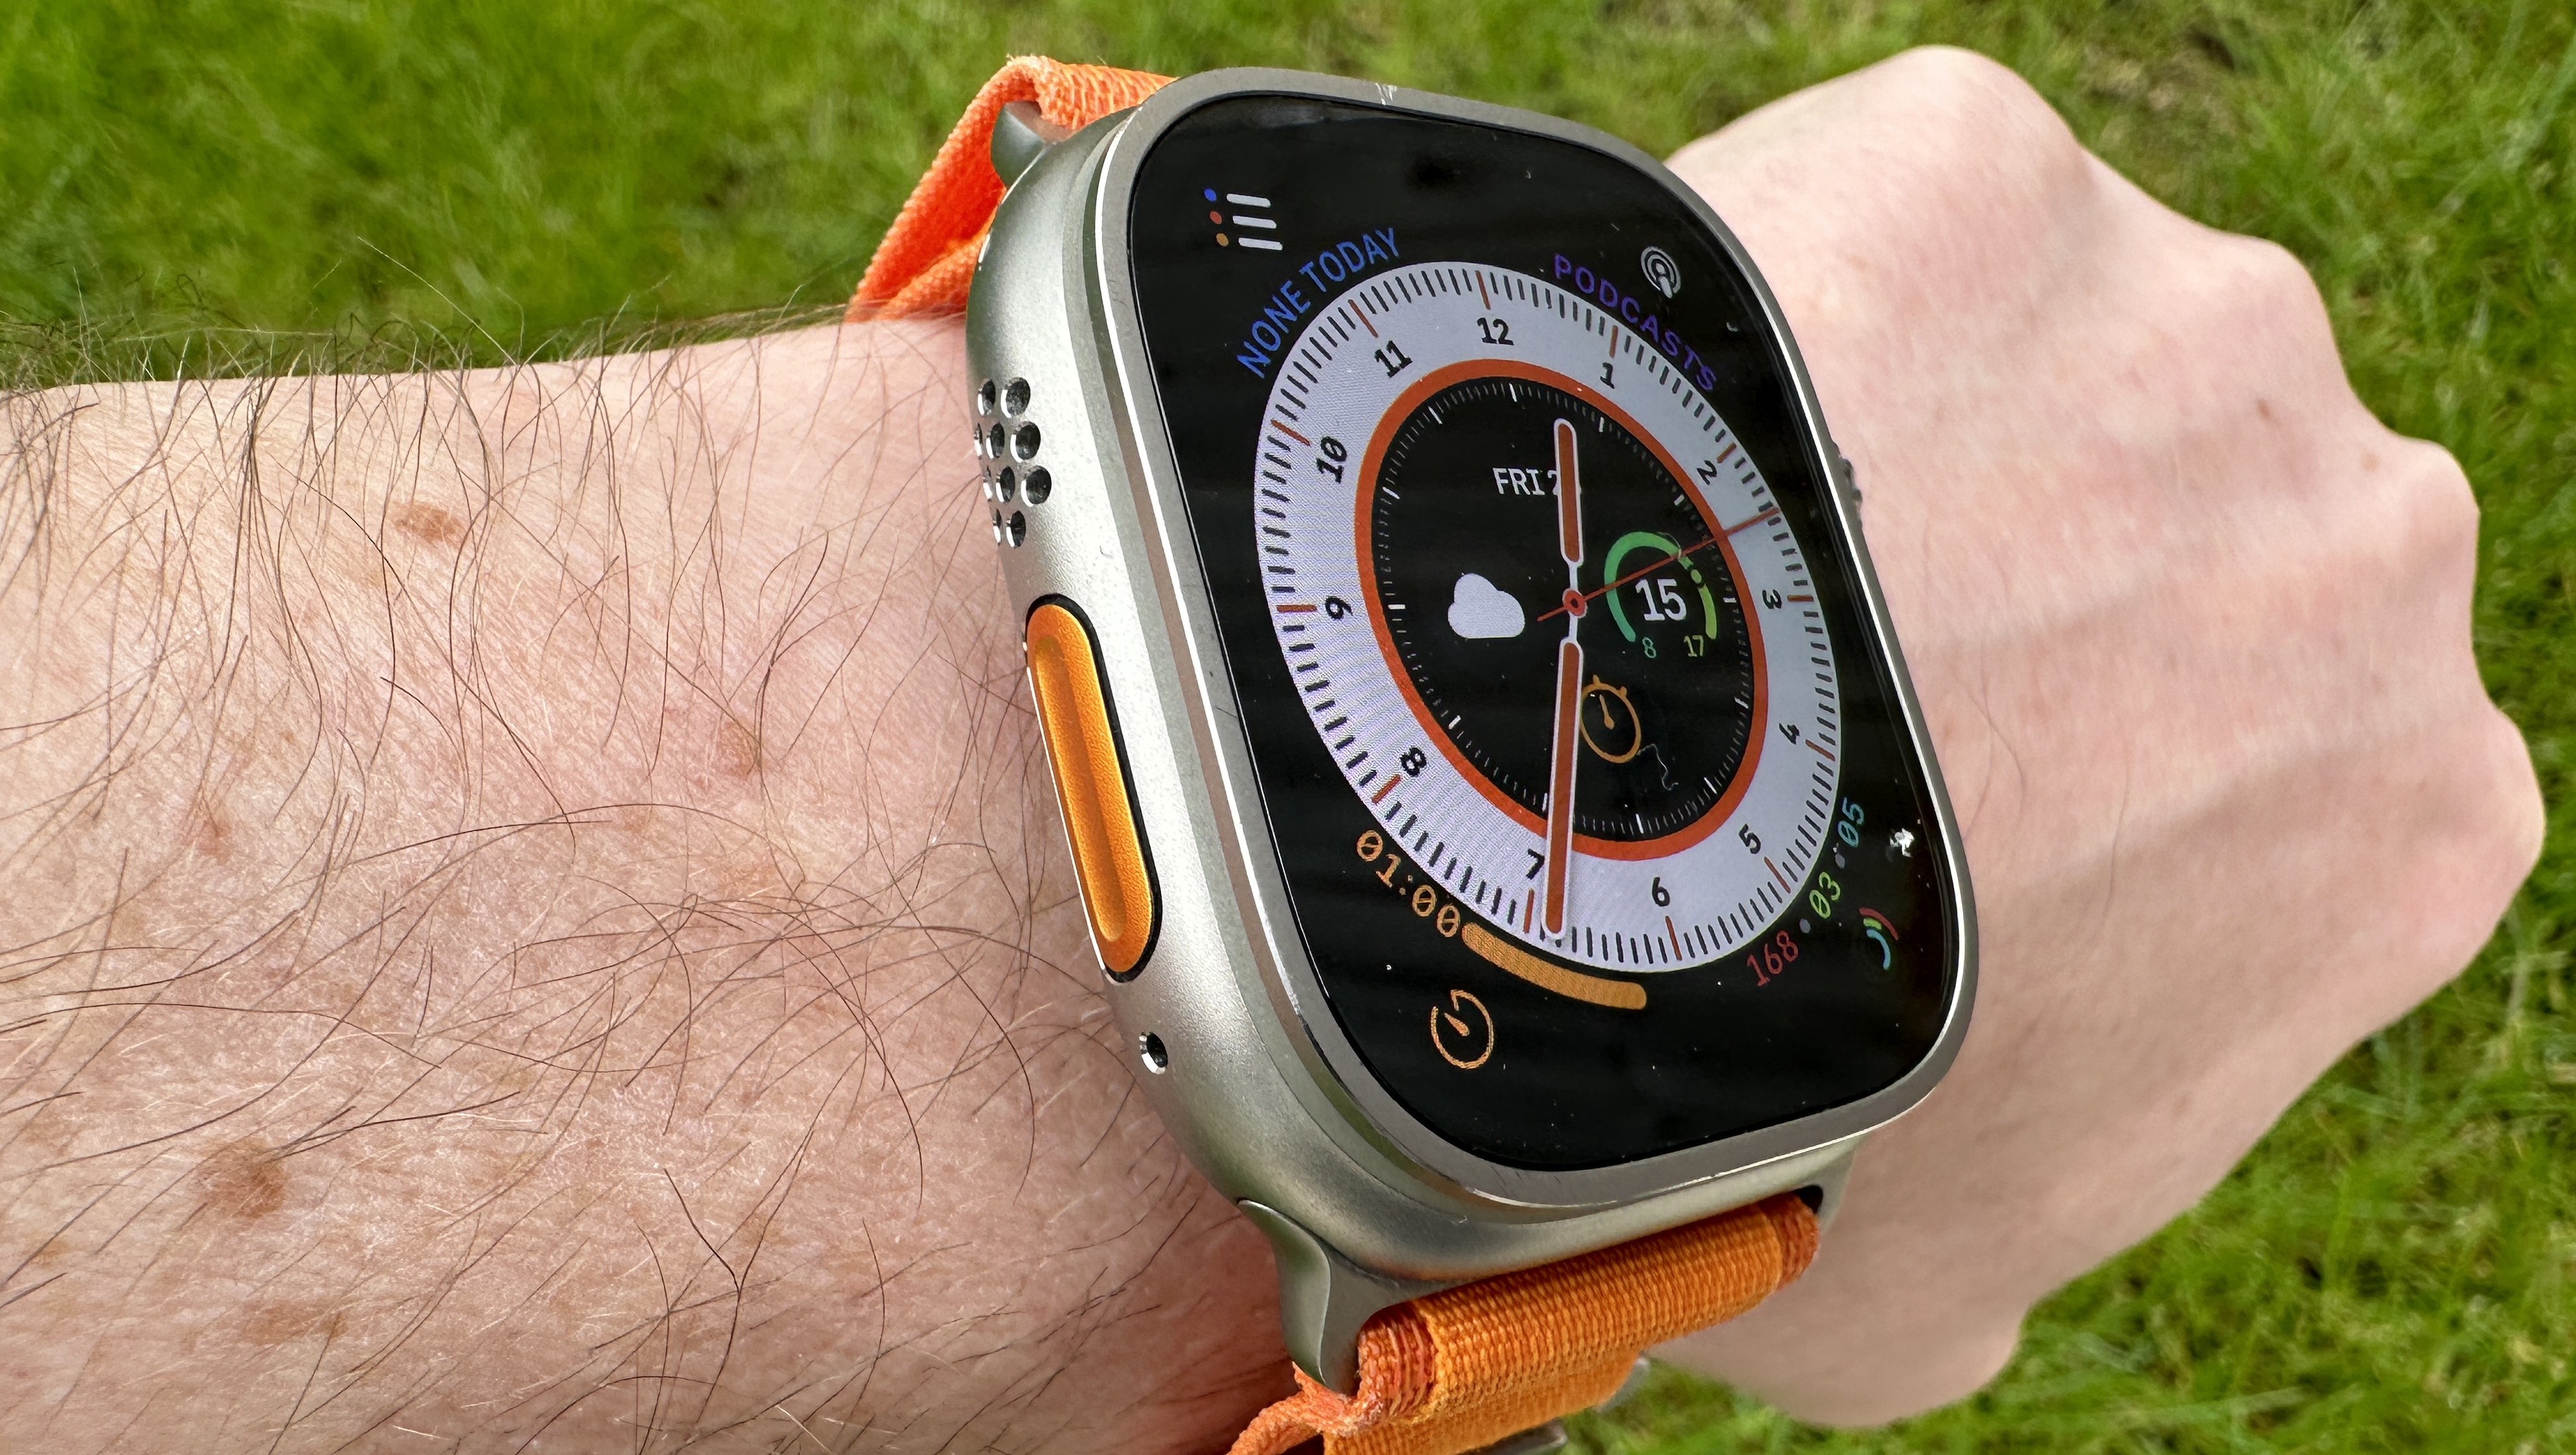 We ran with the Apple Watch Ultra vs Garmin Forerunnerâ¦